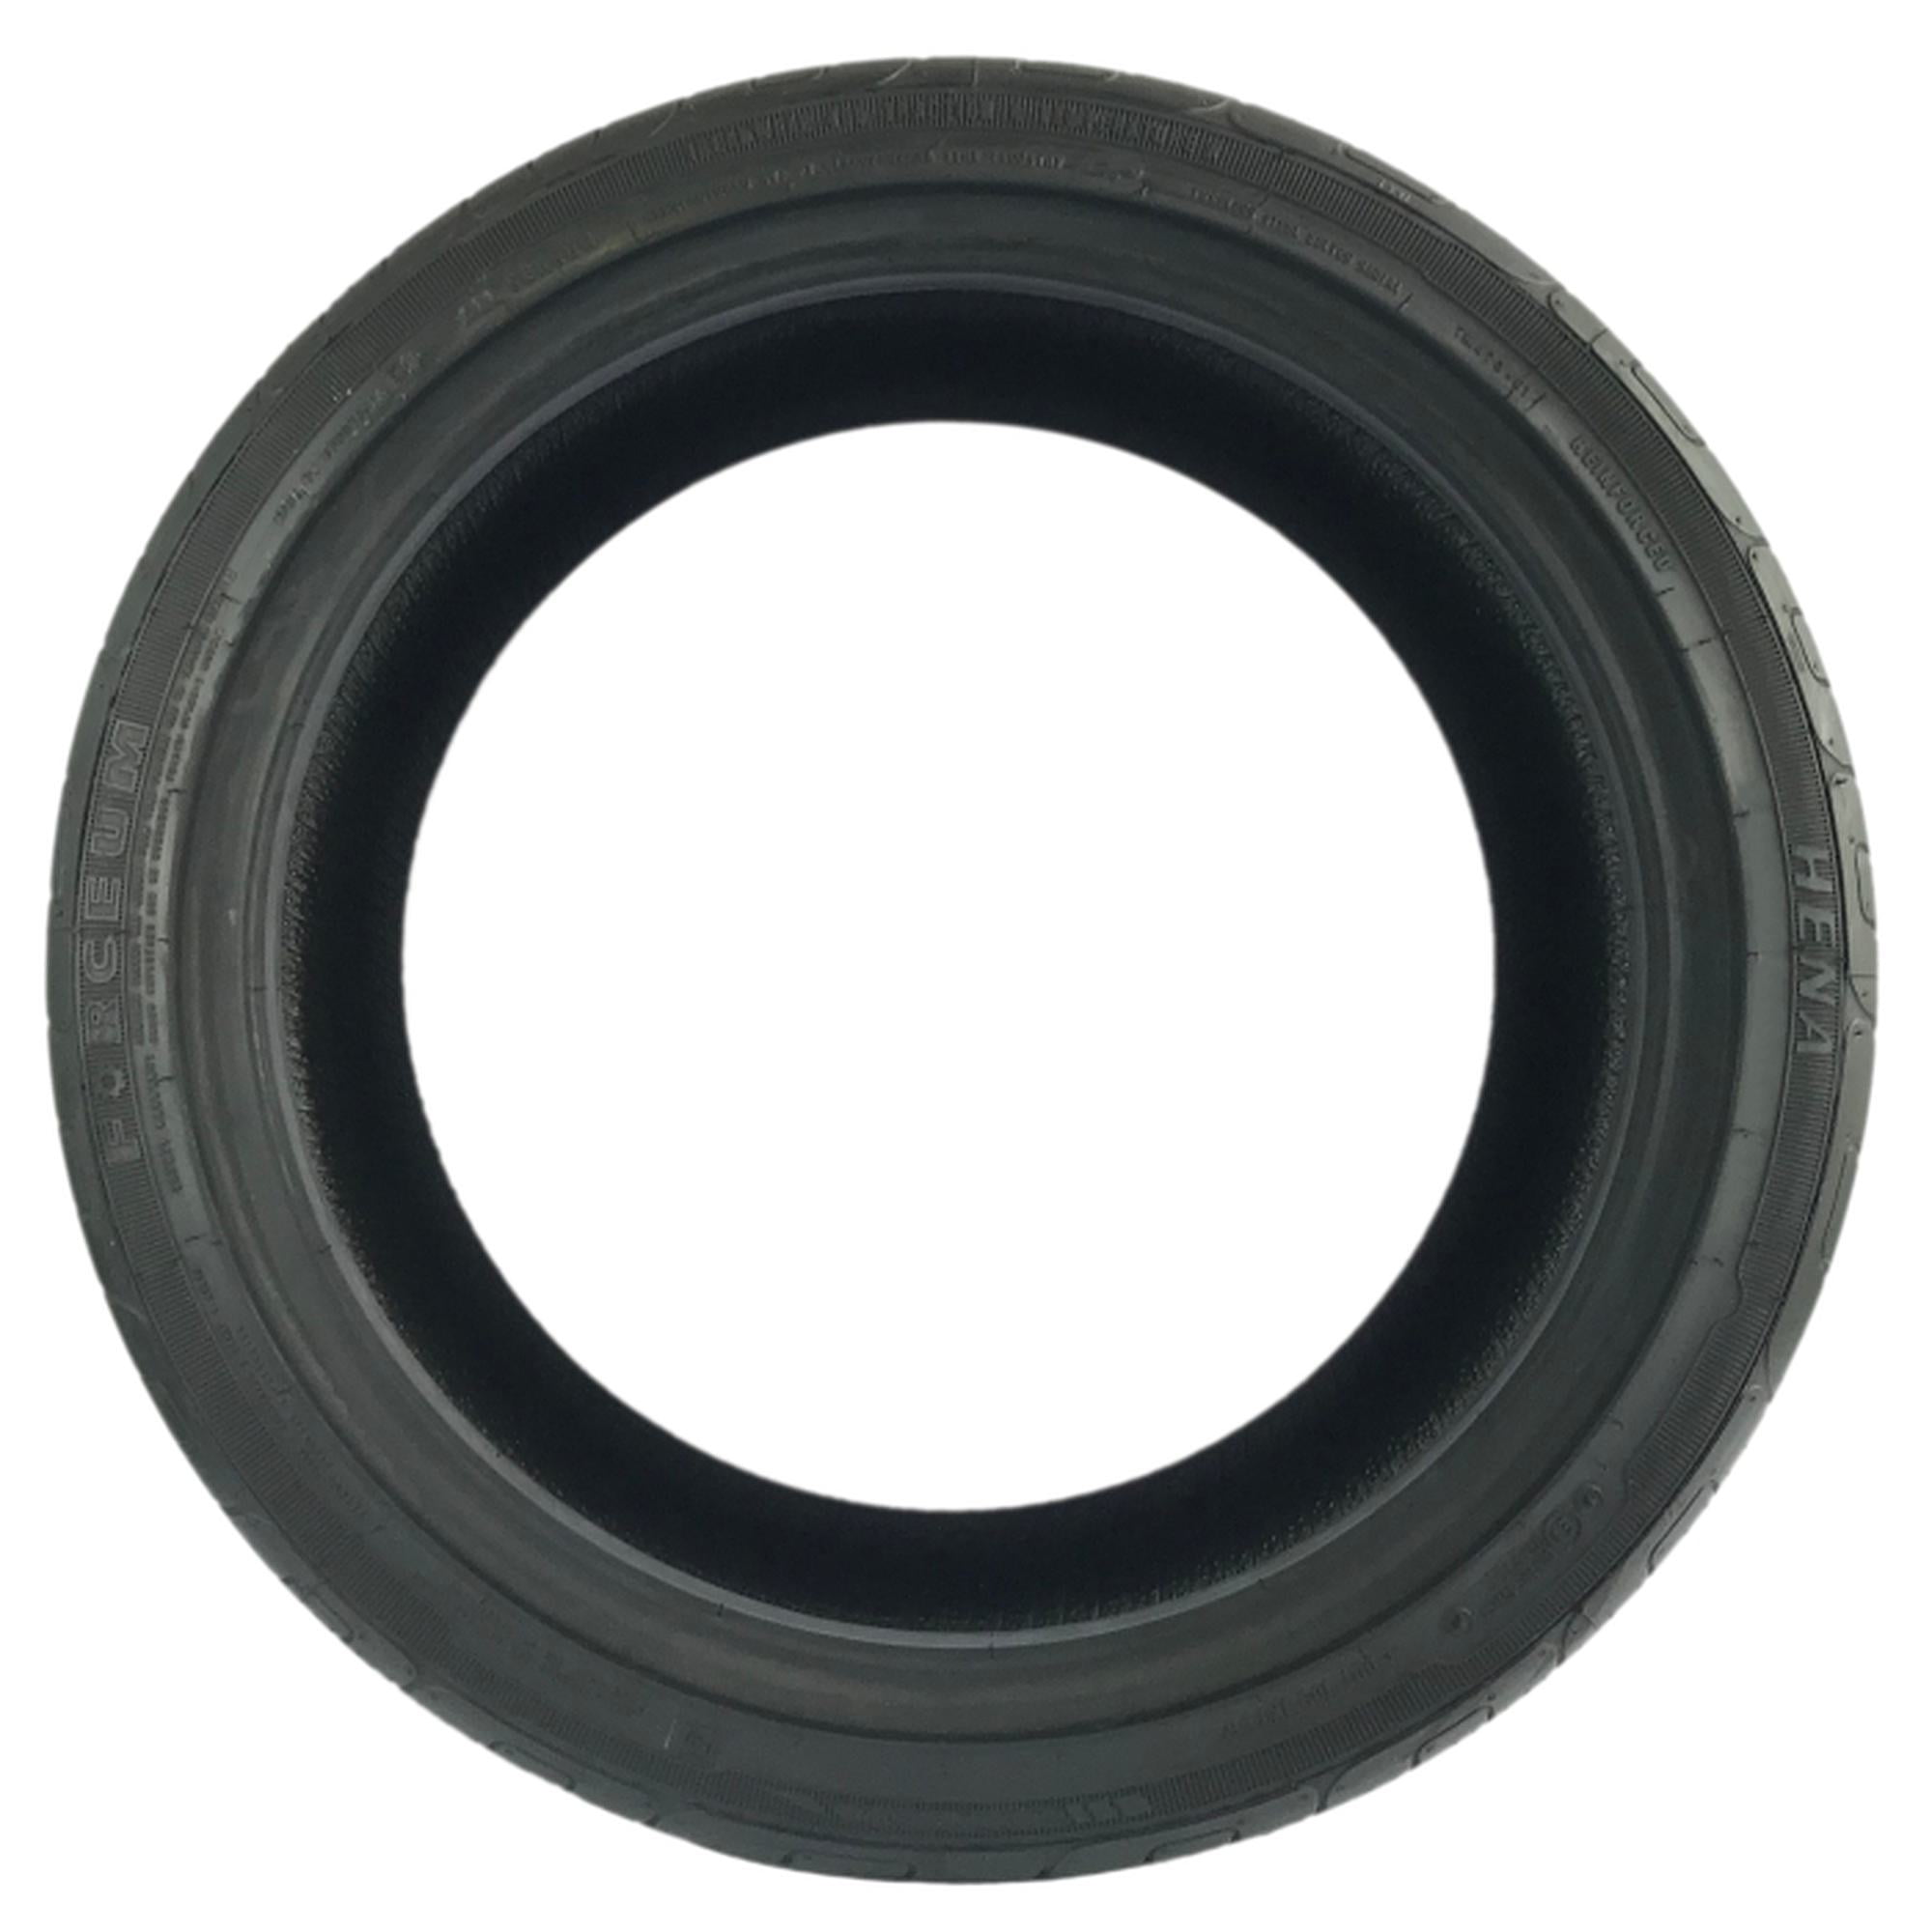 Forceum HENA all_ Season Radial Tire-225/45R17 94W